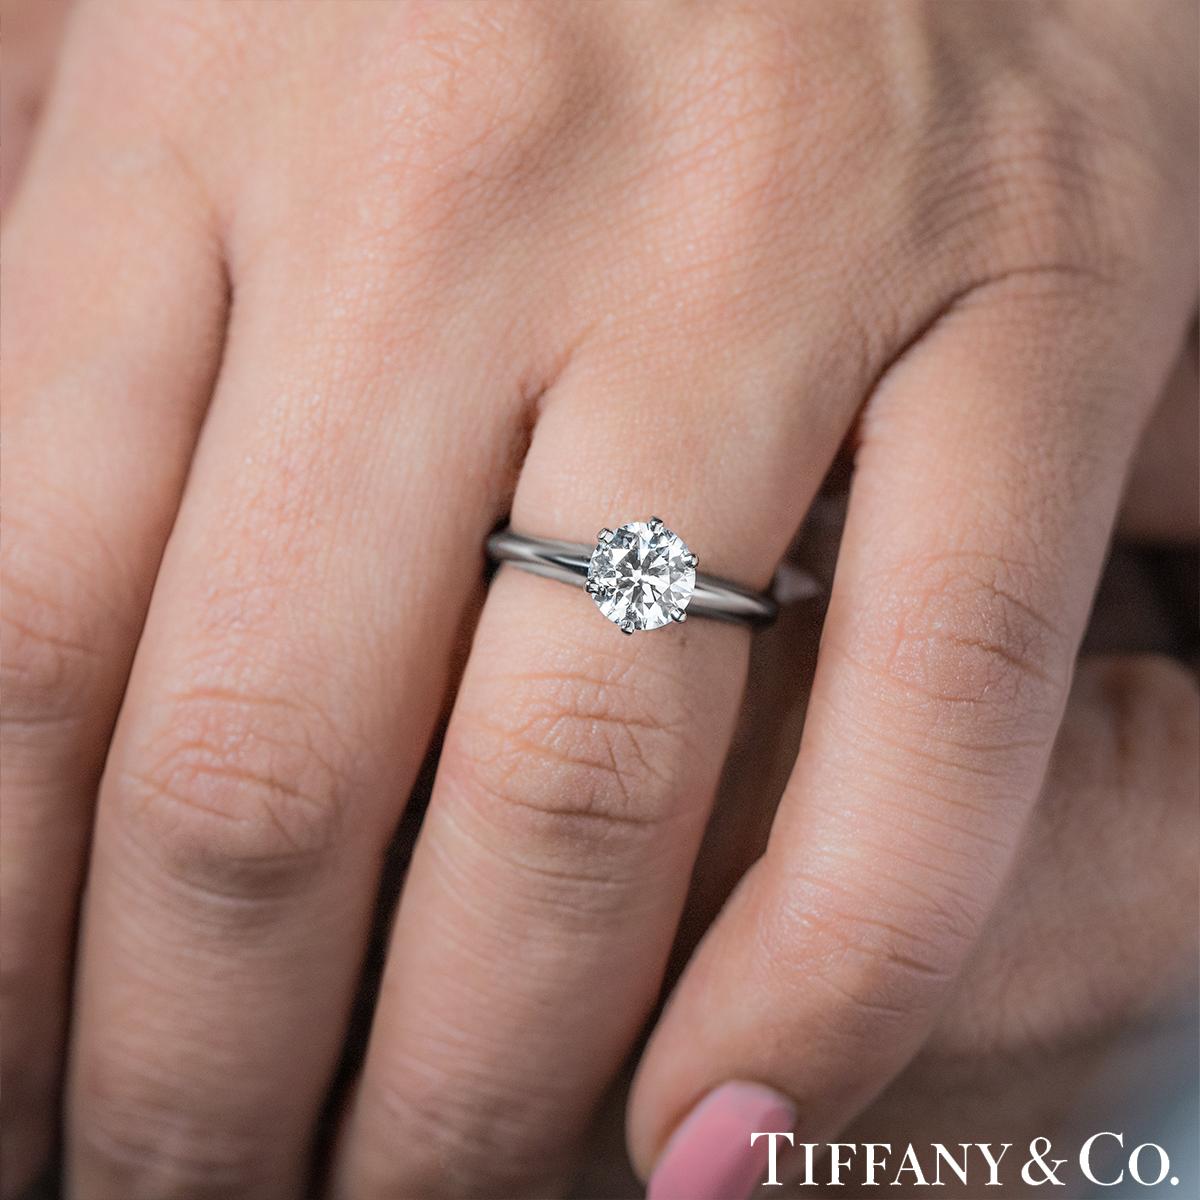 Women's or Men's GIA Certified Tiffany & Co. Round Brilliant Cut Diamond Ring 1.01ct E/VS1 For Sale